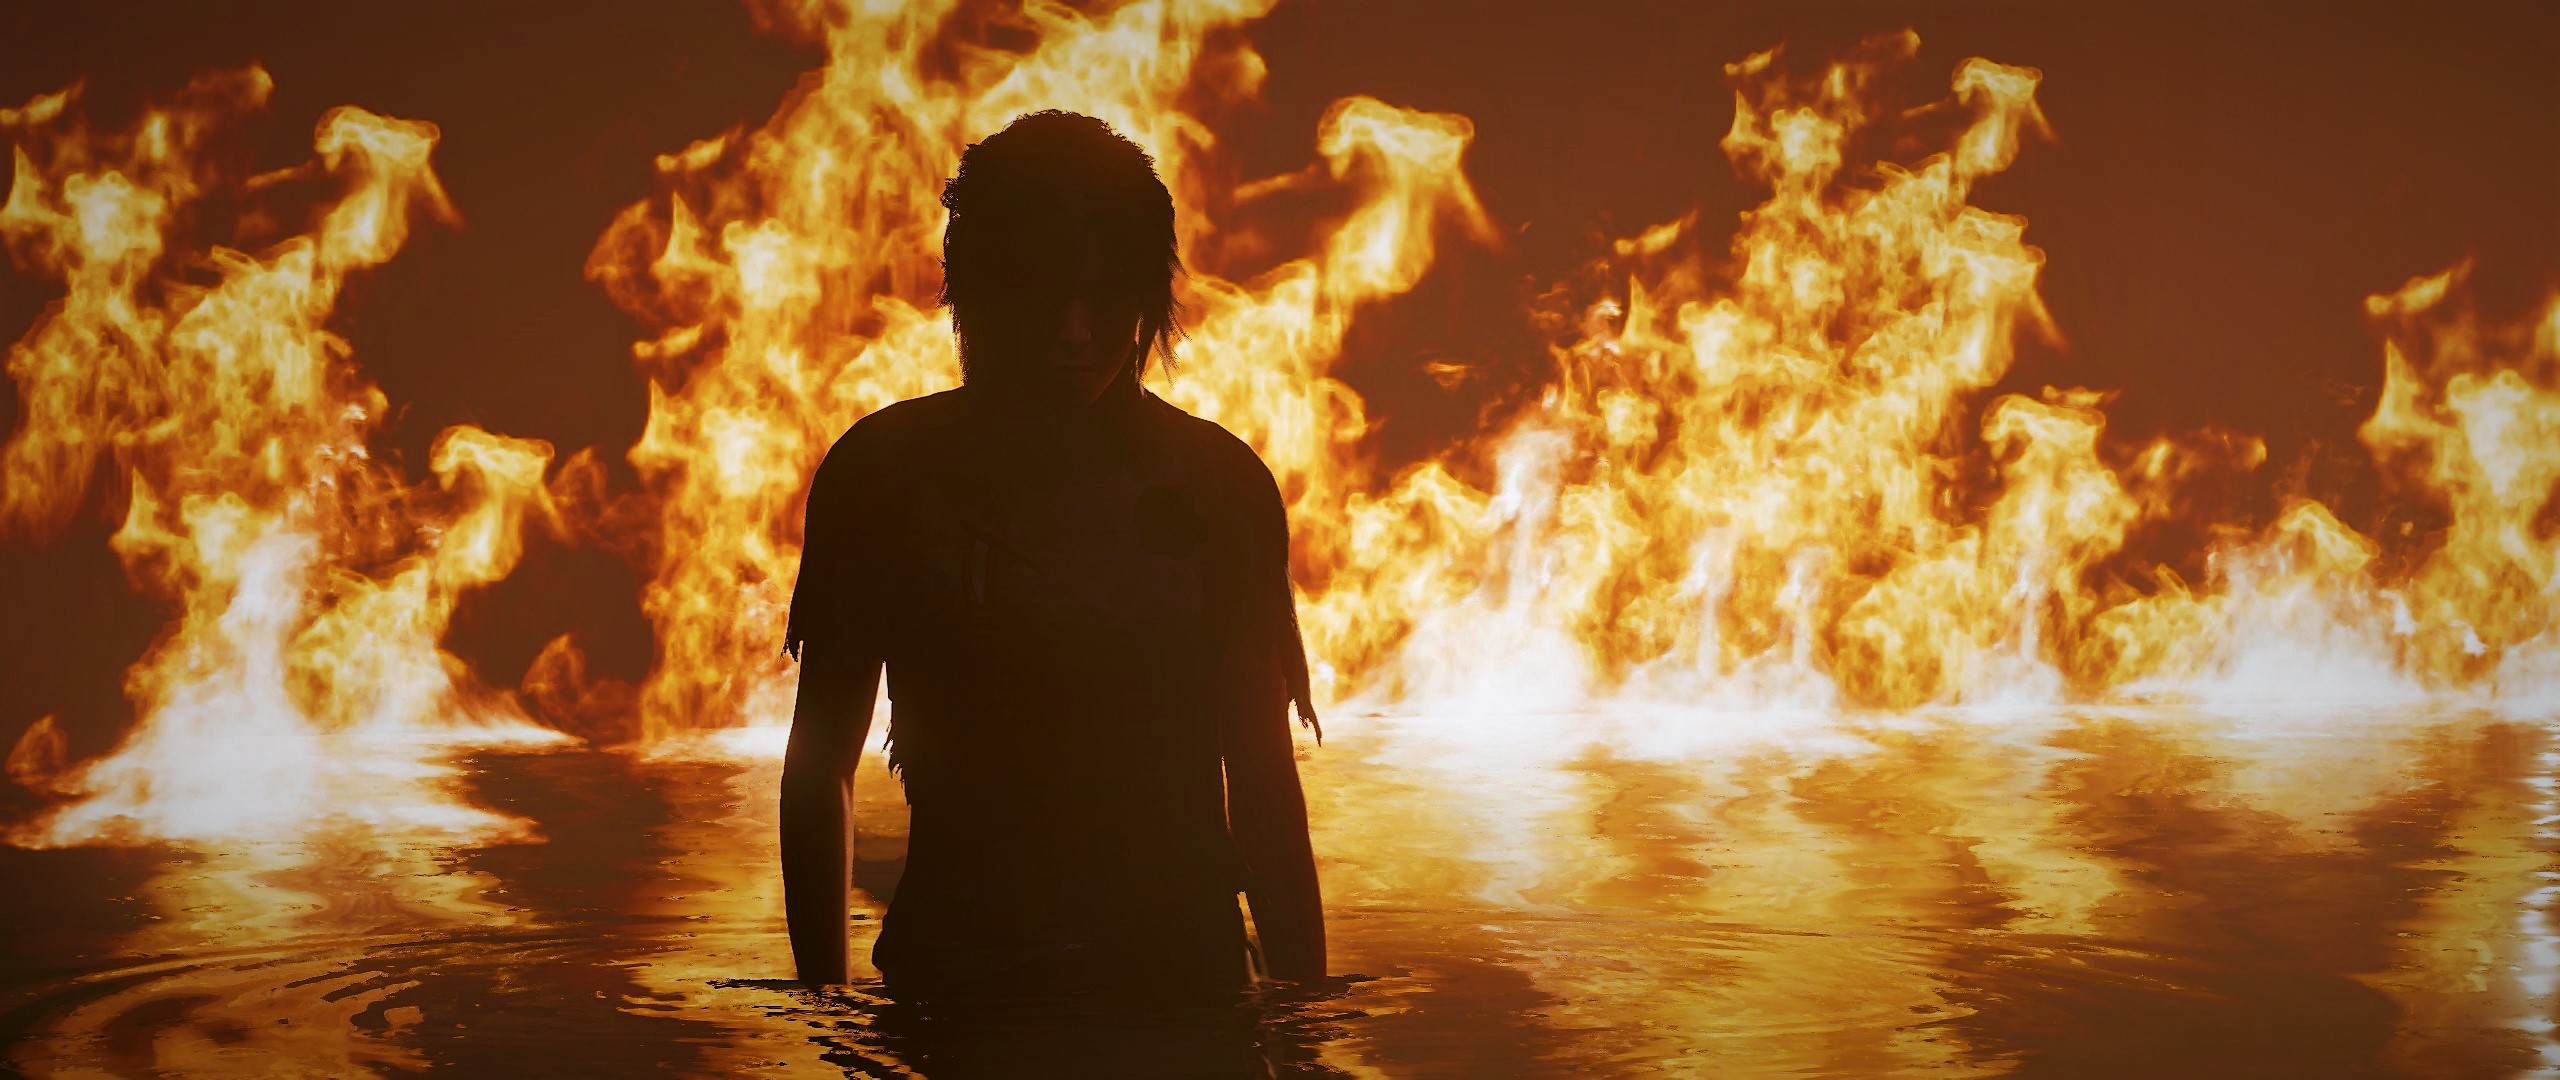 General 2560x1080 Tomb Raider Shadow of the Tomb Raider Lara Croft (Tomb Raider) fire burning in water video game girls screen shot PC gaming video games